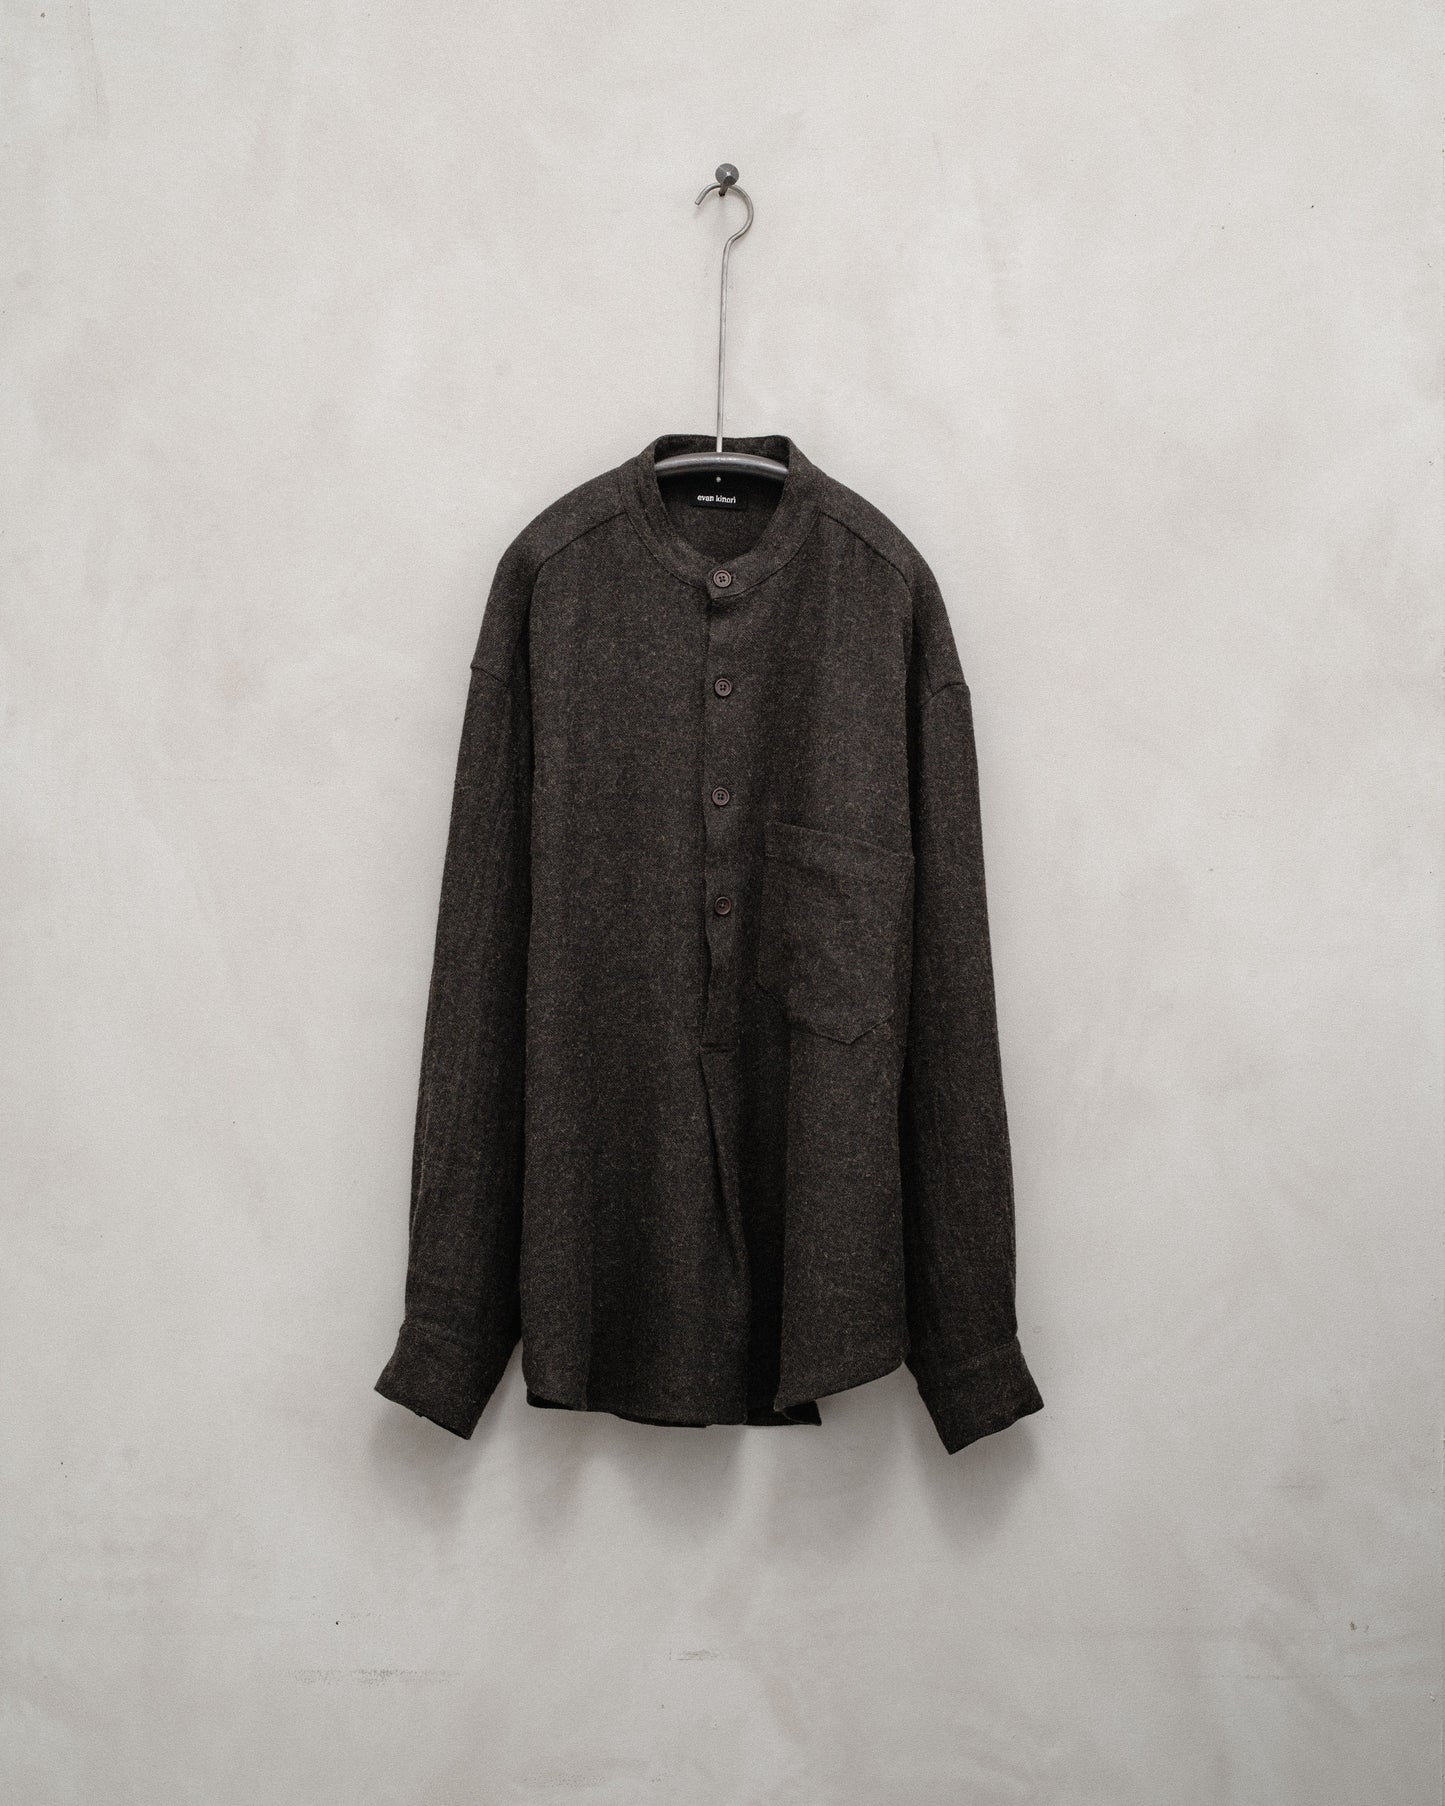 Popover Shirt - Brushed Linen/Wool Twill, Dark Brown